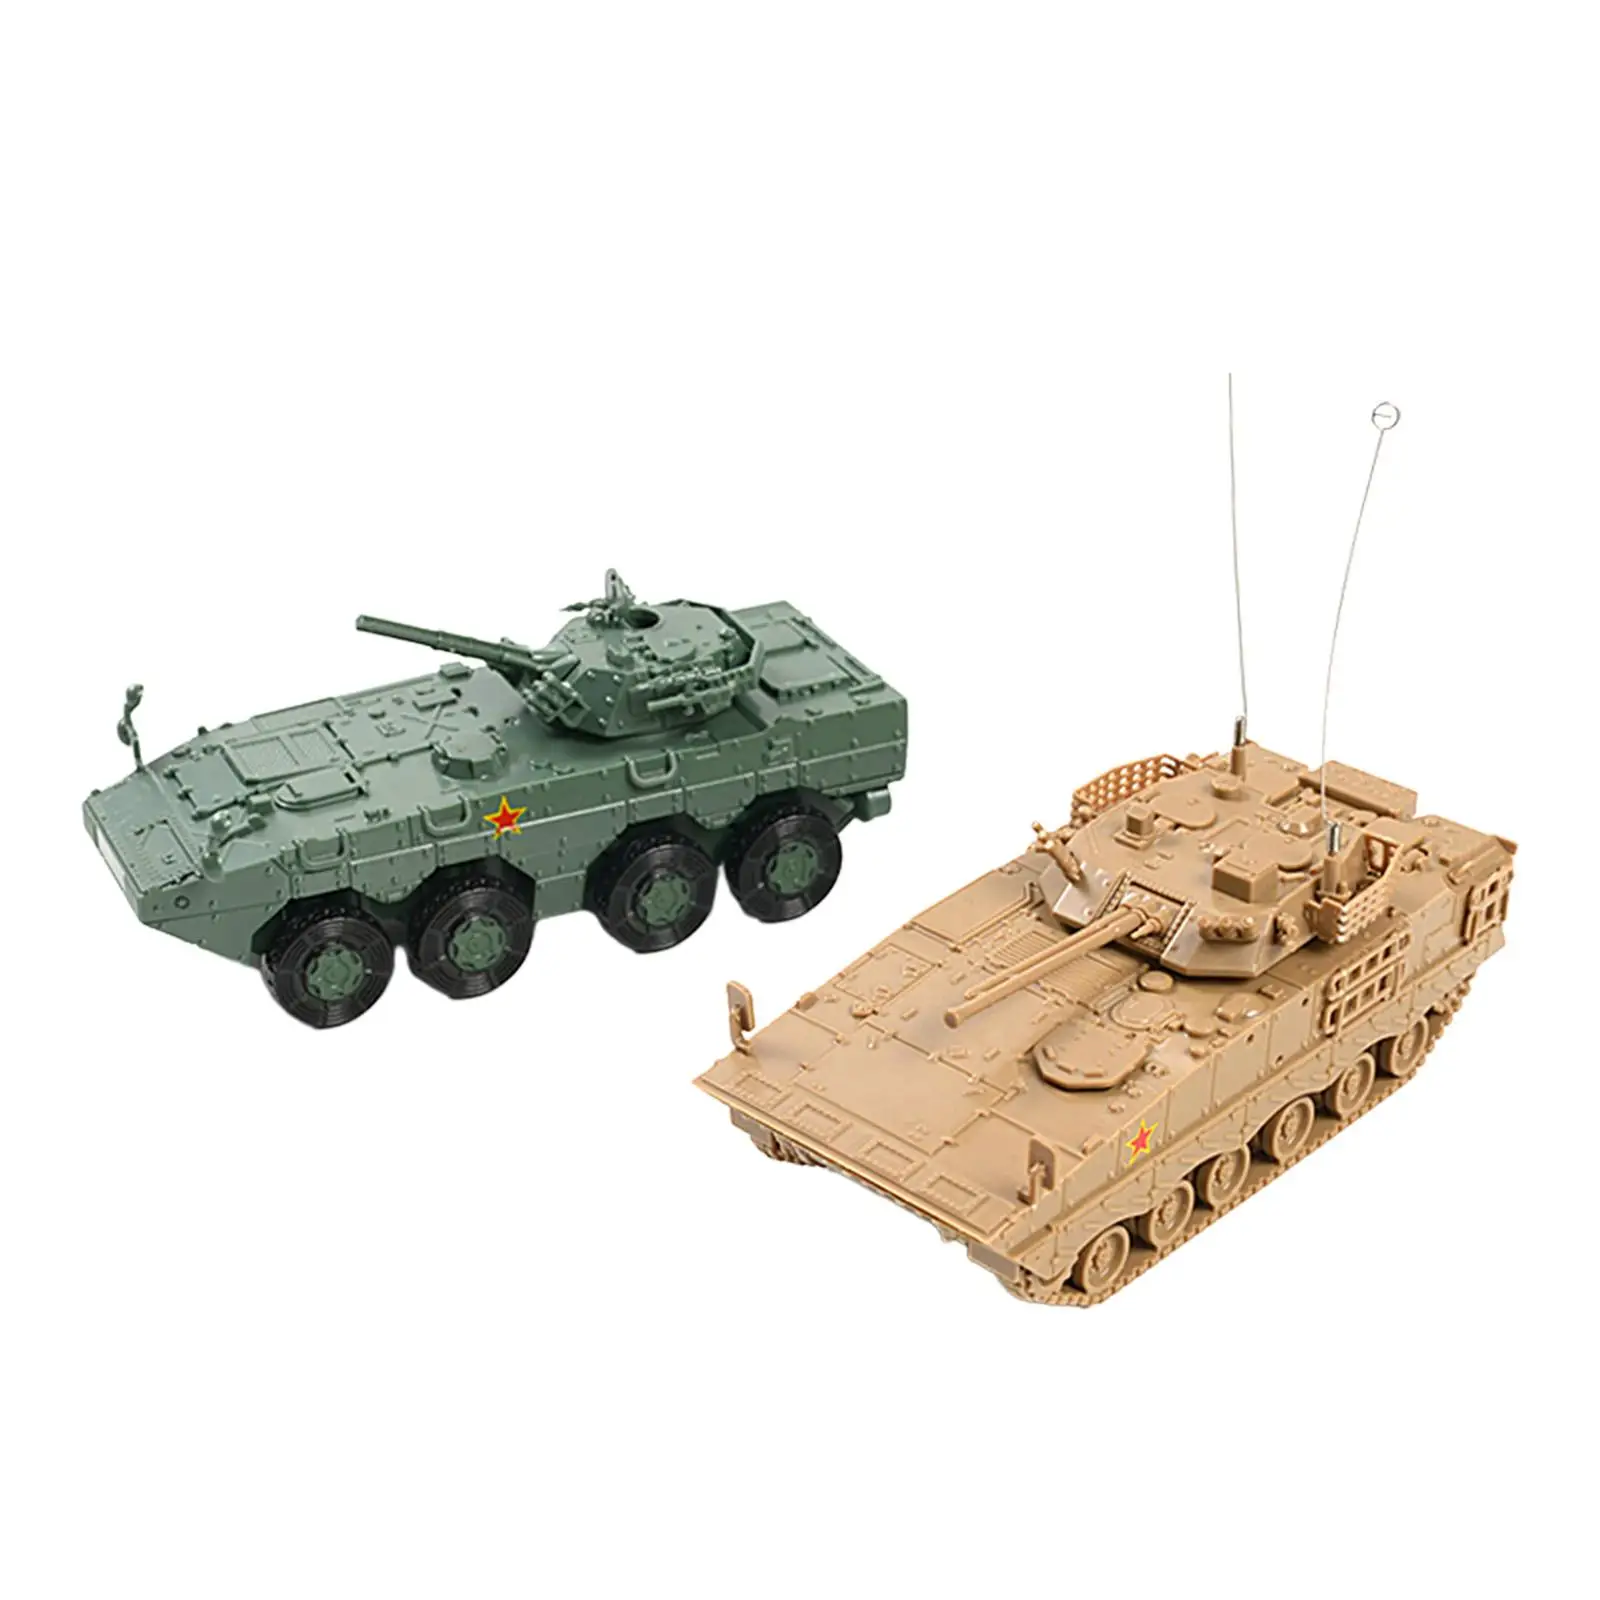 2Pcs 1/72 Tank Model Building Kits Ornaments Armored Vehicle Mini Vehicles Tabletop Decor for Friends Boys Family Girls Children